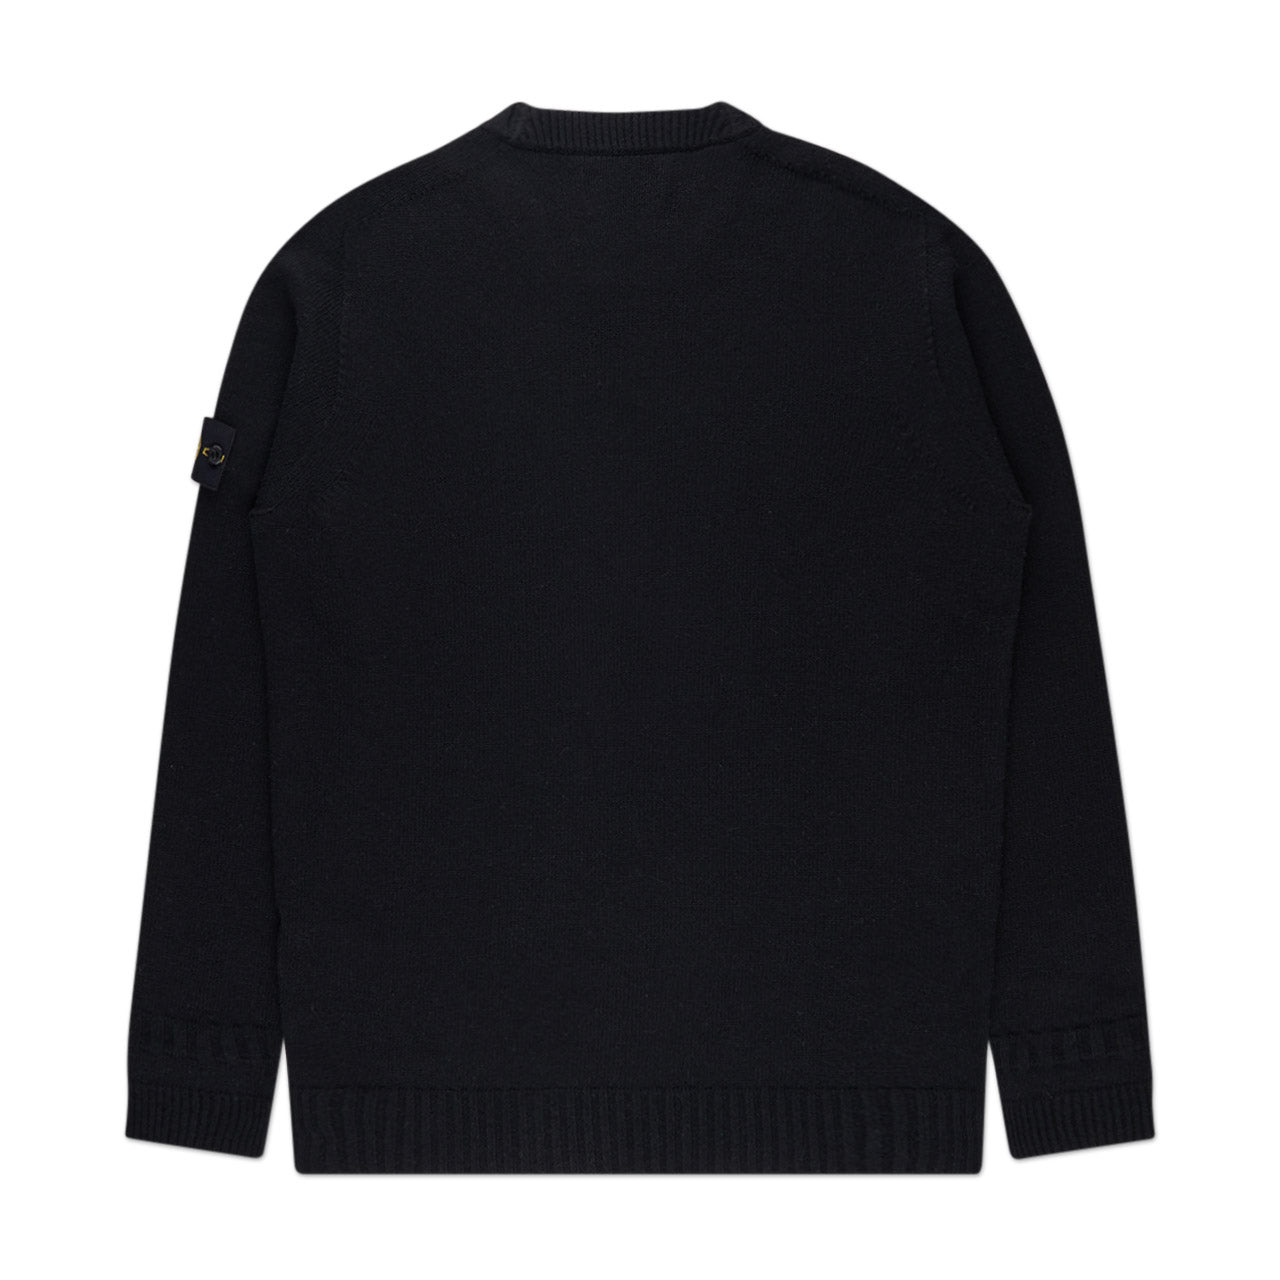 stone island knitted sweatshirt (black)